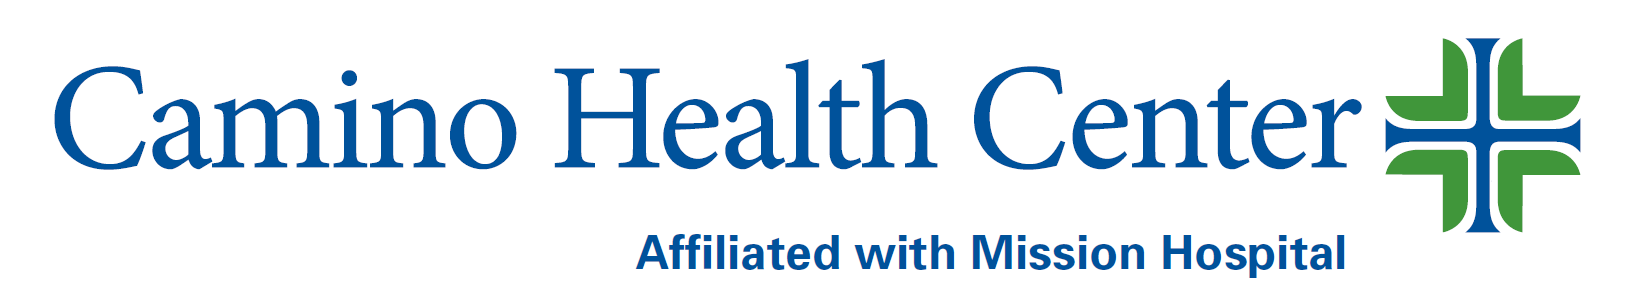 camino-health-logo.png Logo